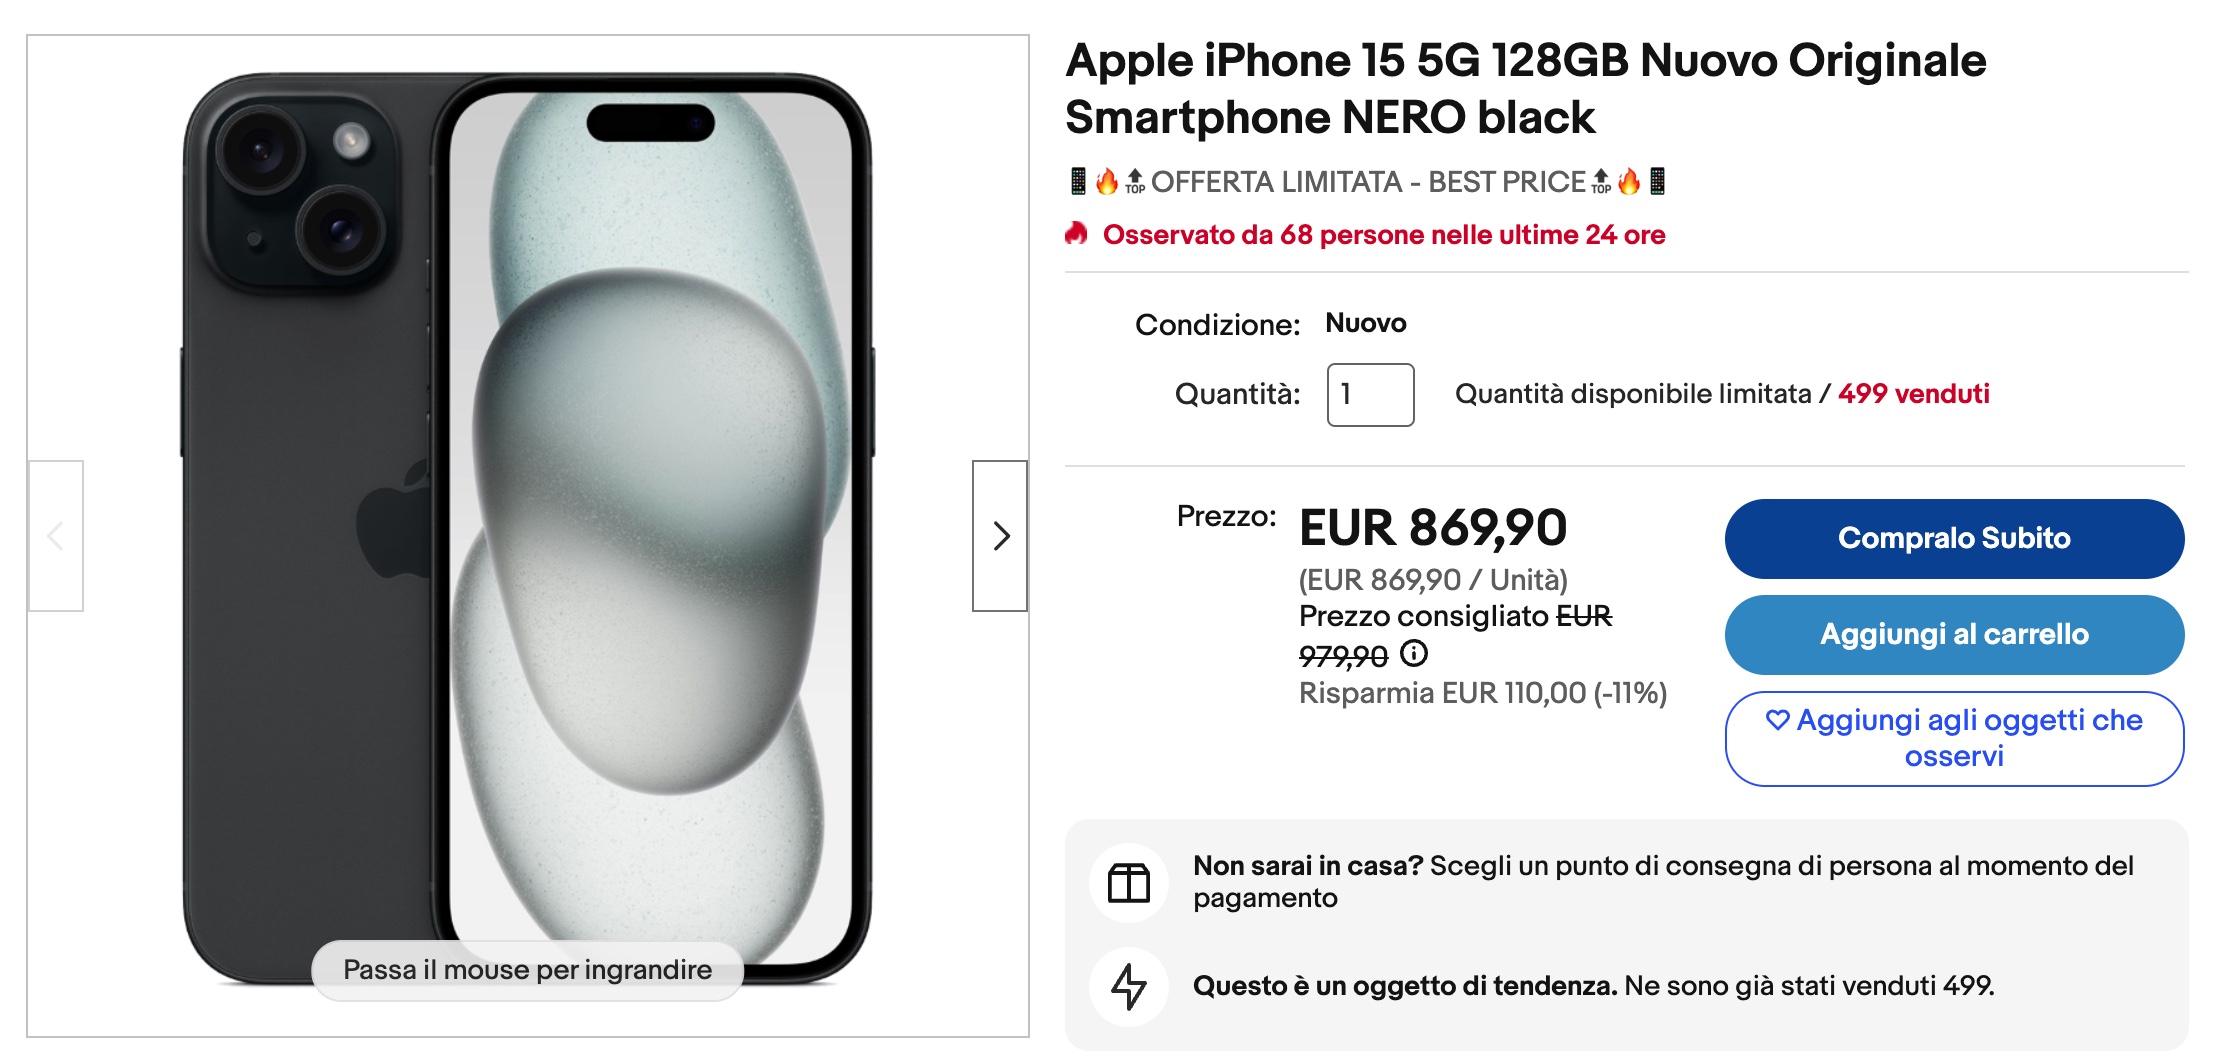 Oggi iPhone 15 è in sconto fino a 185€